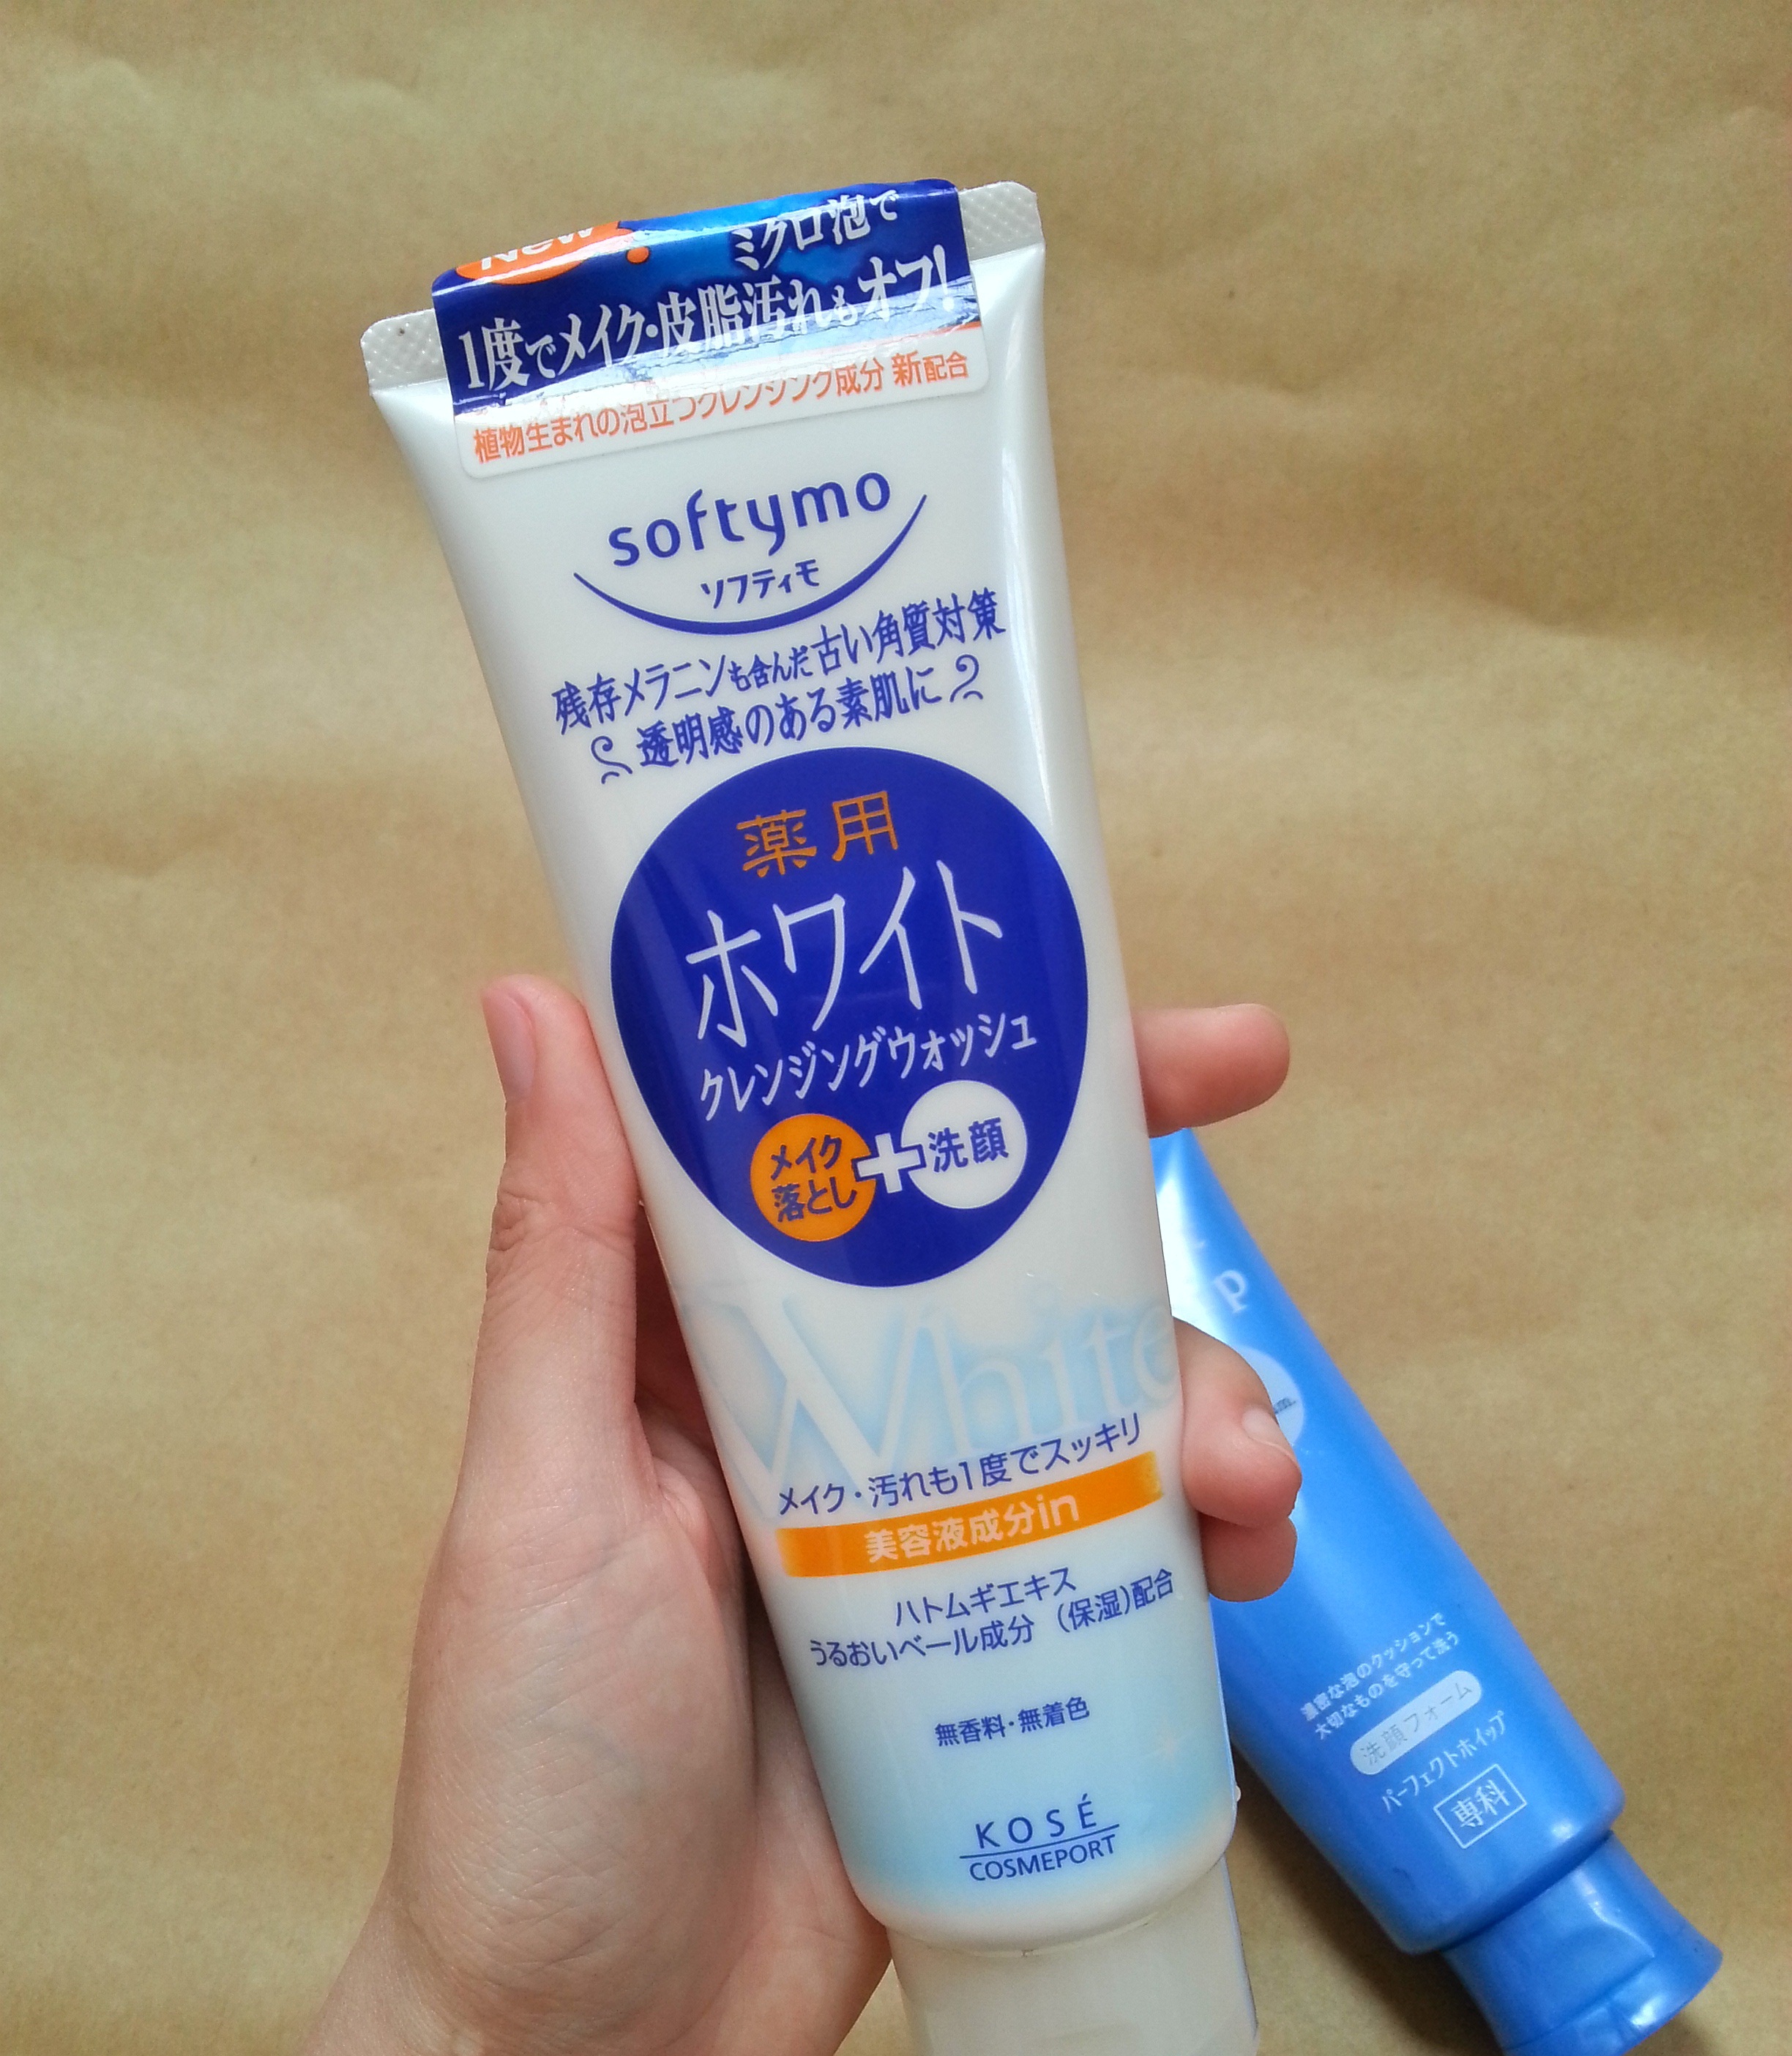 Sữa rửa mặt Kose Softymo Nhật Bản 3